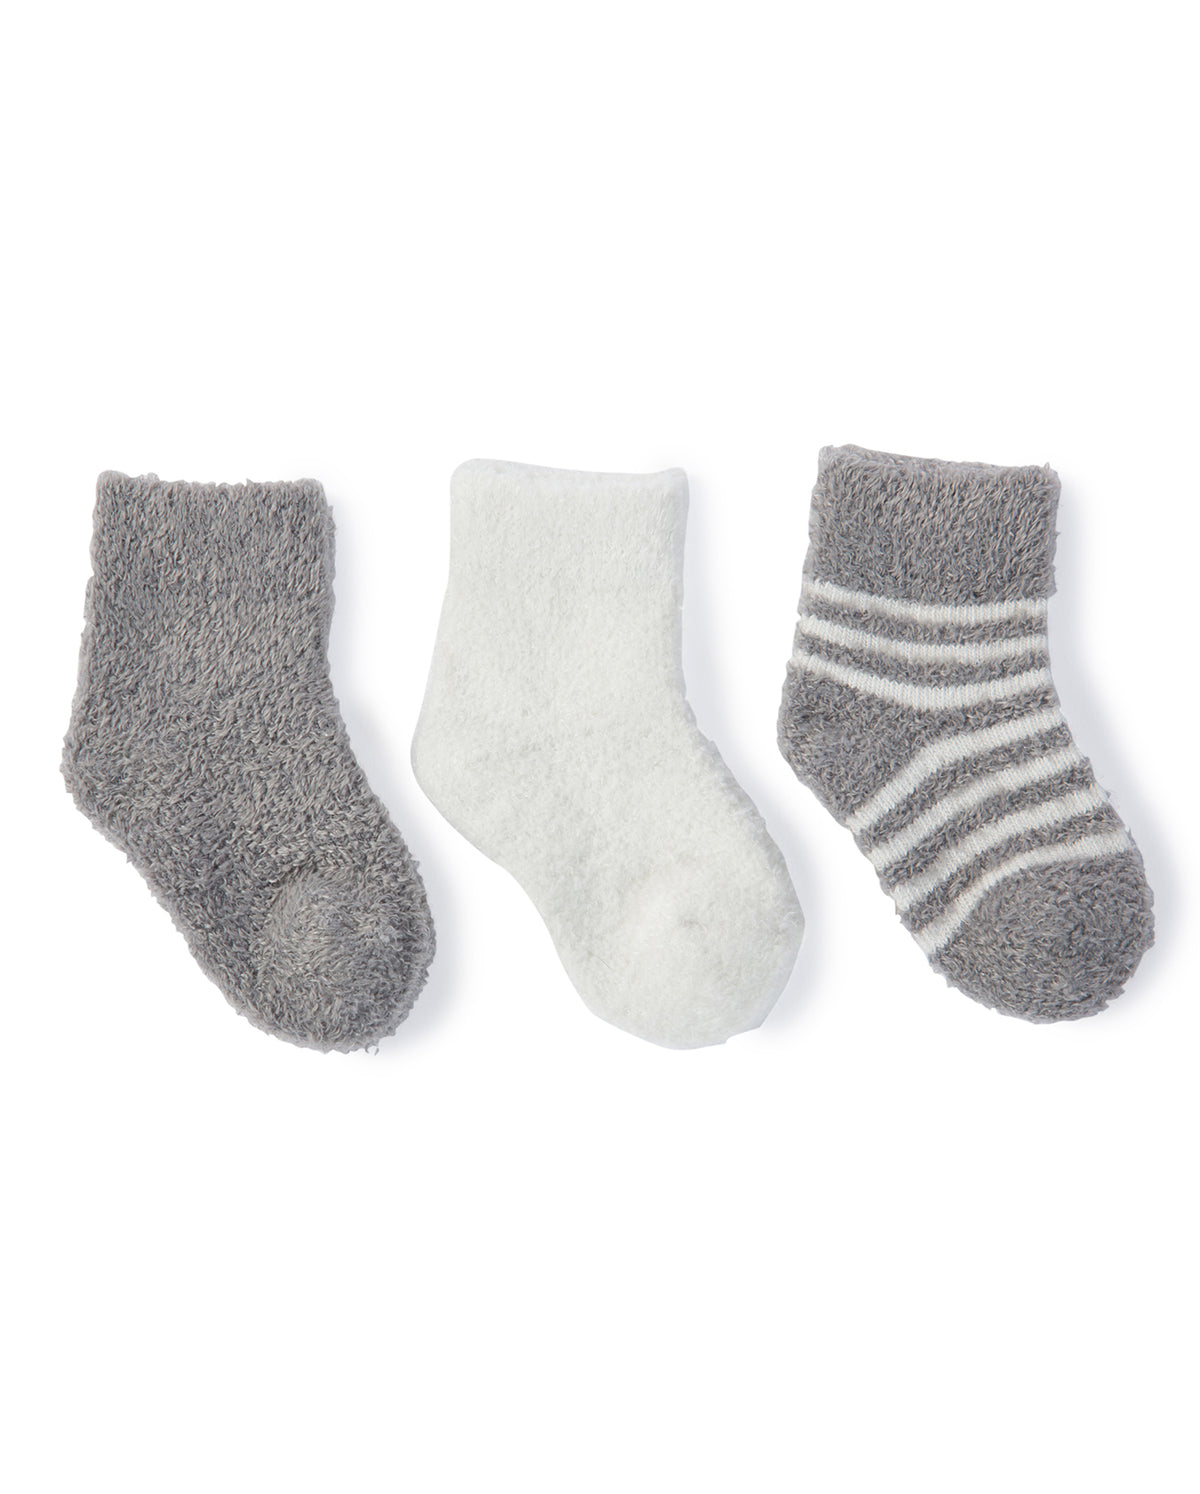 Ccl Infant Socks 3-Pack